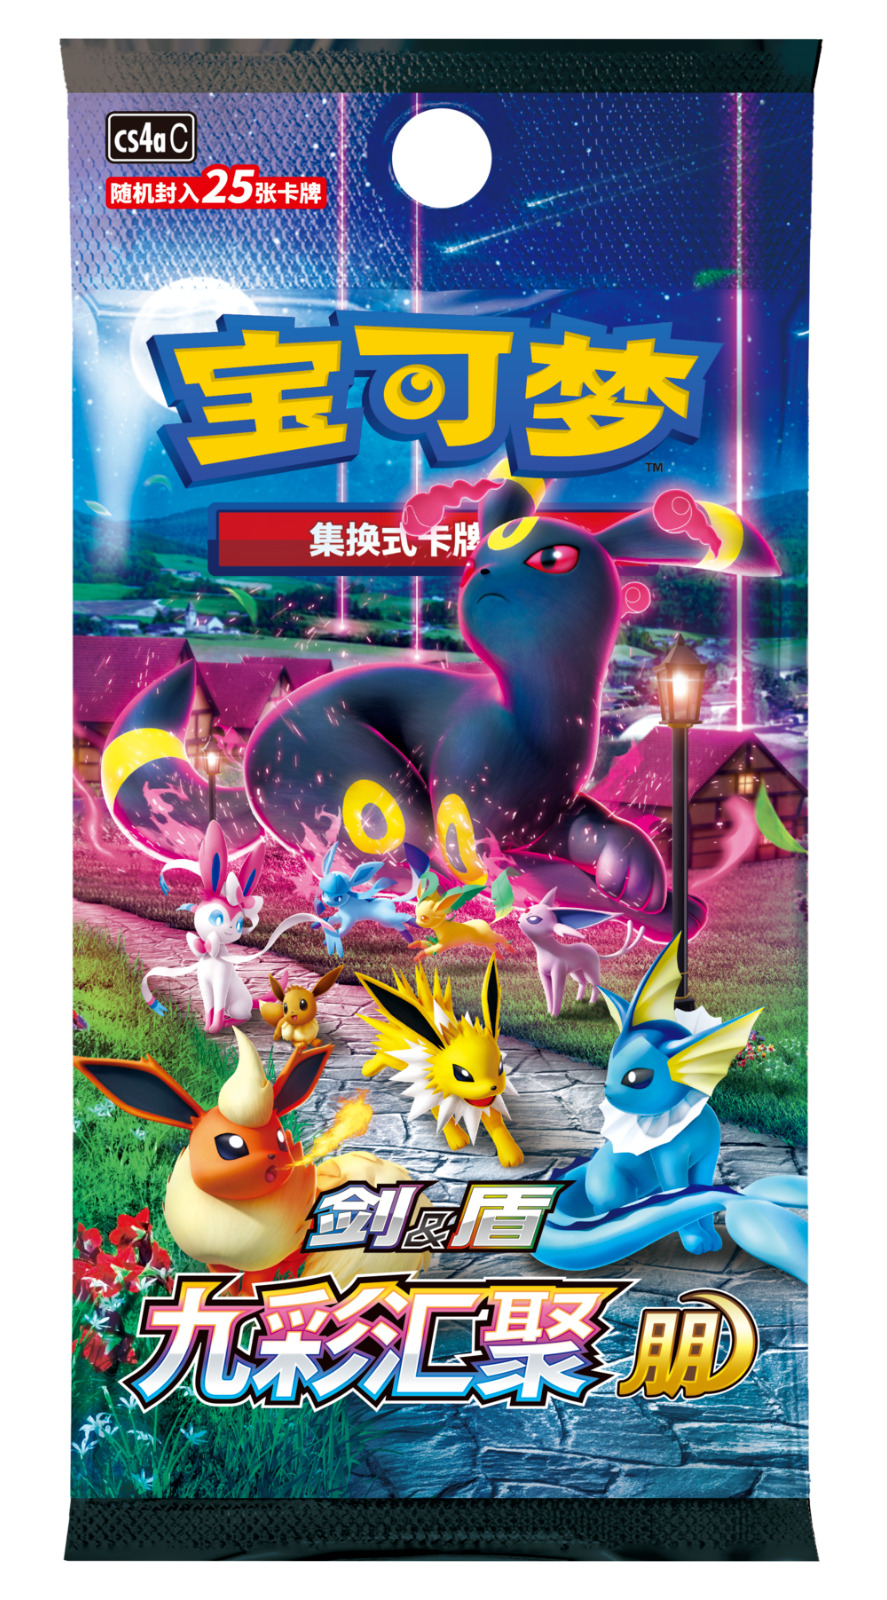 Pokemon S-Chinese Nine Colors Gathering Eevee Booster Jumbo Pack CS4aC - Peng